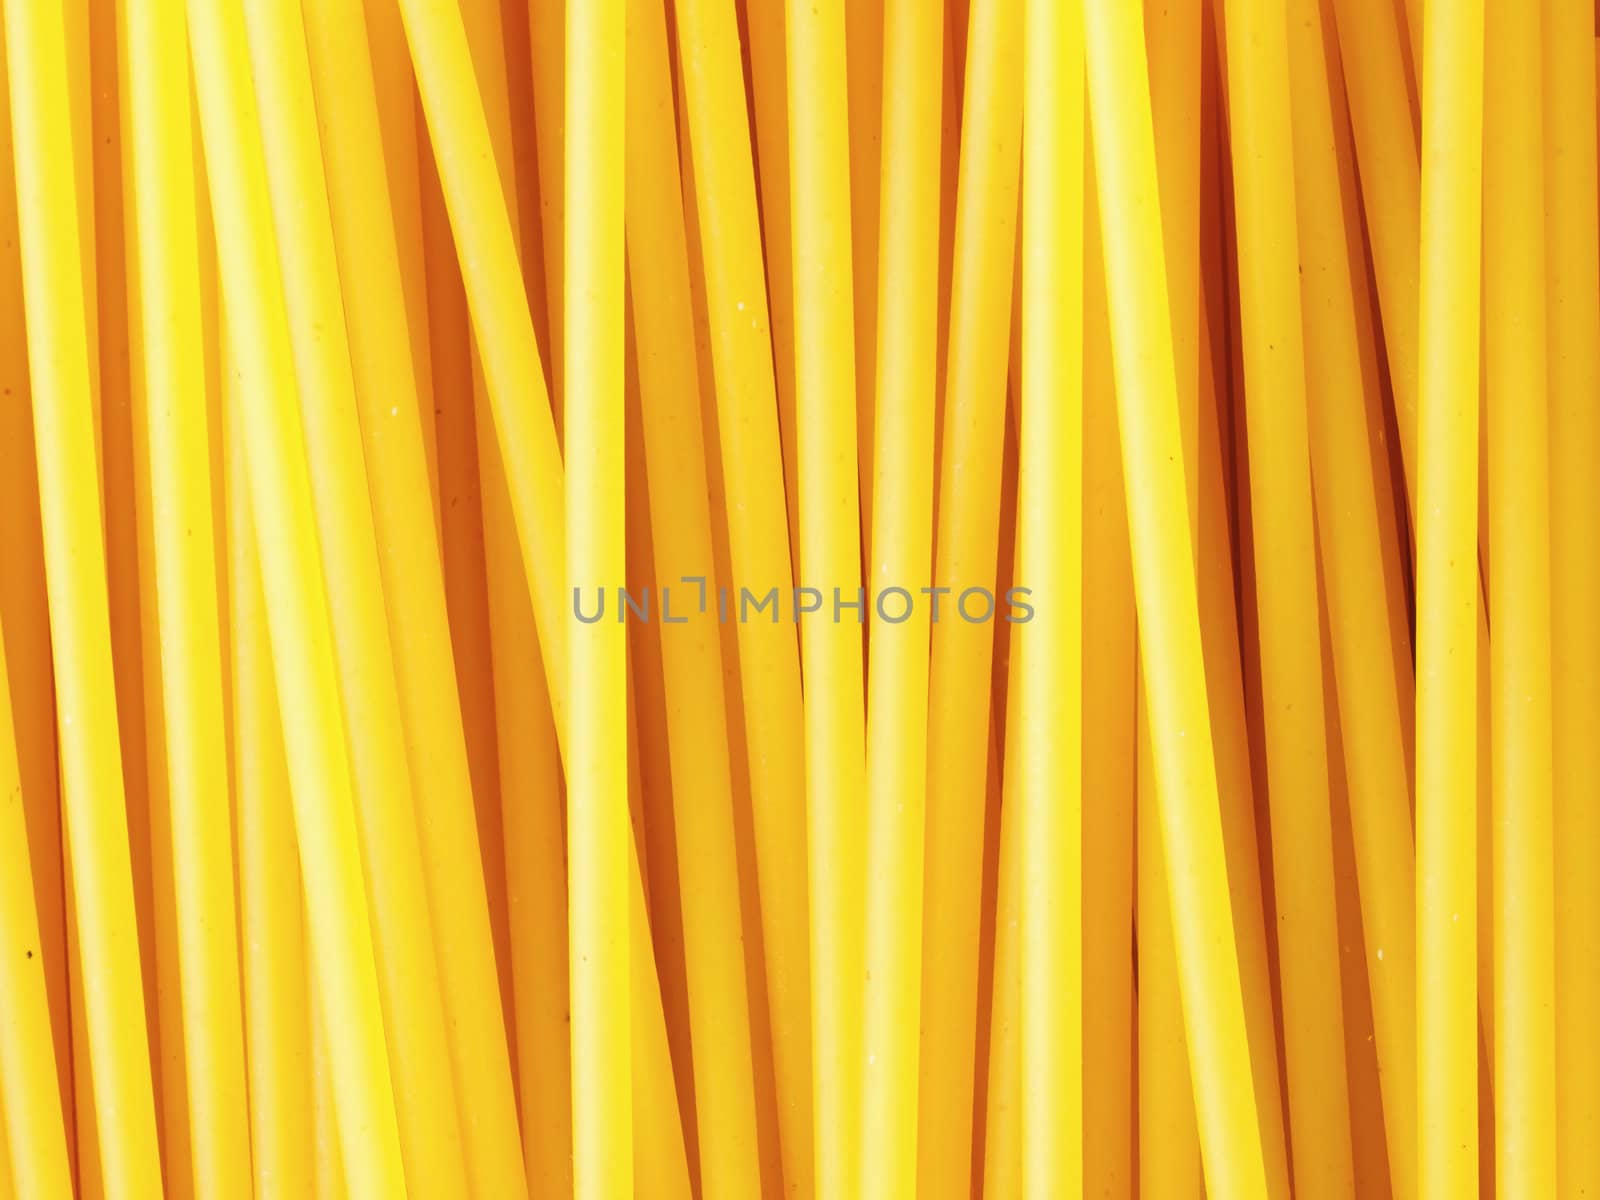 spaghetti pasta noodles by zkruger